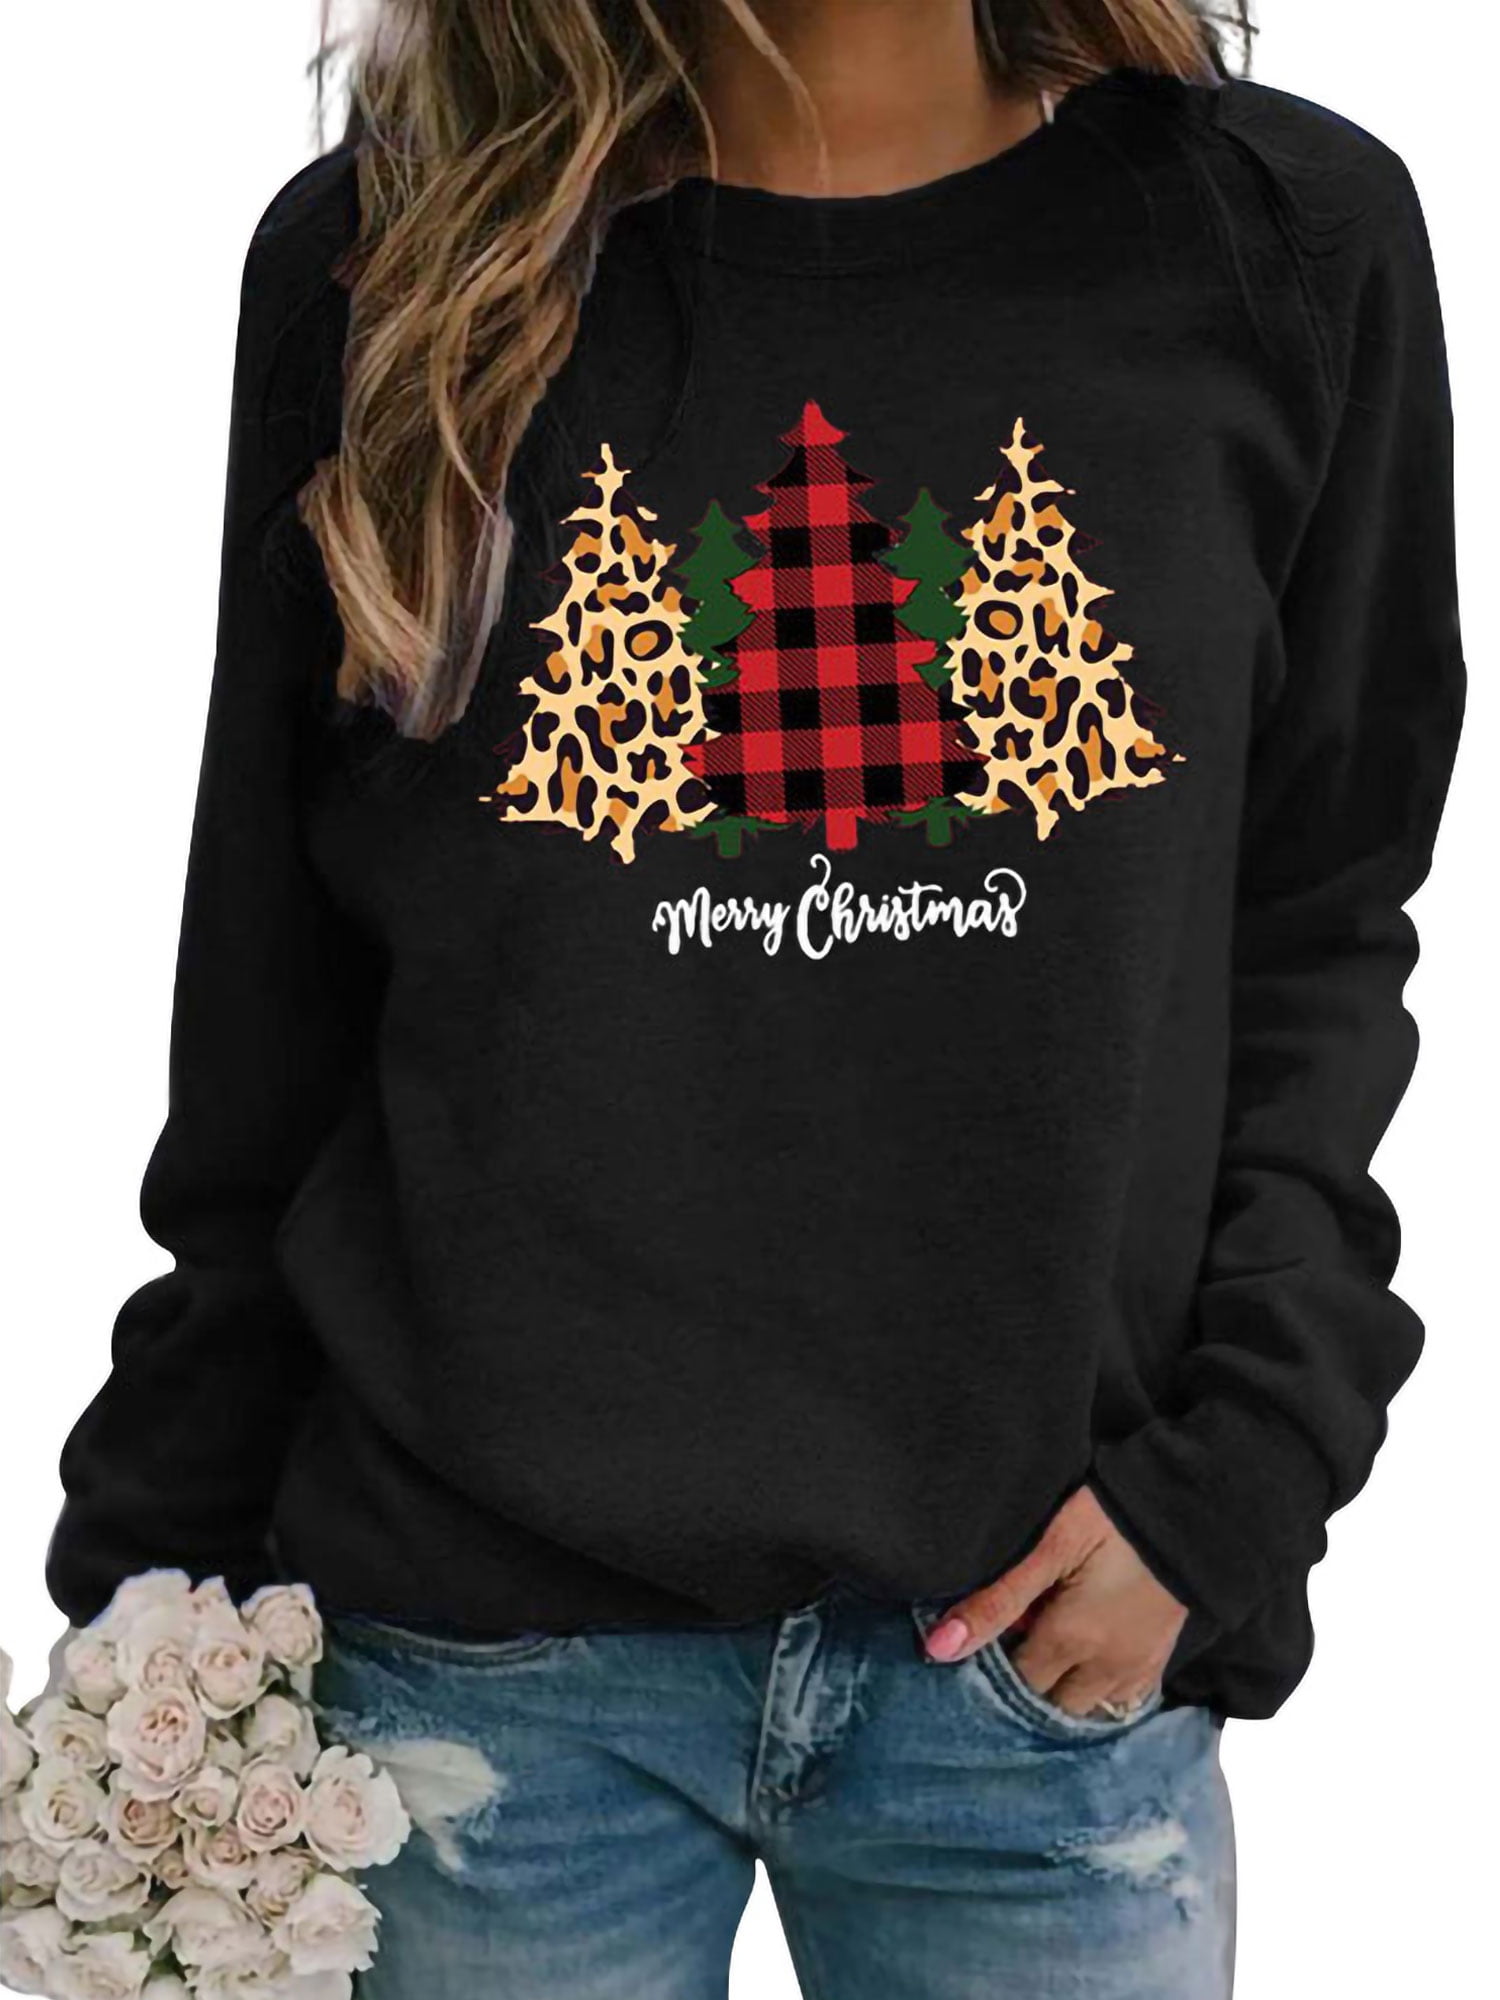 Leopard Printed Gifts for Women Holiday Shirt,Merry Christmas Crewneck Sweater Christmas Sweatshirt Buffalo Plaid Shirt Christmas Trees